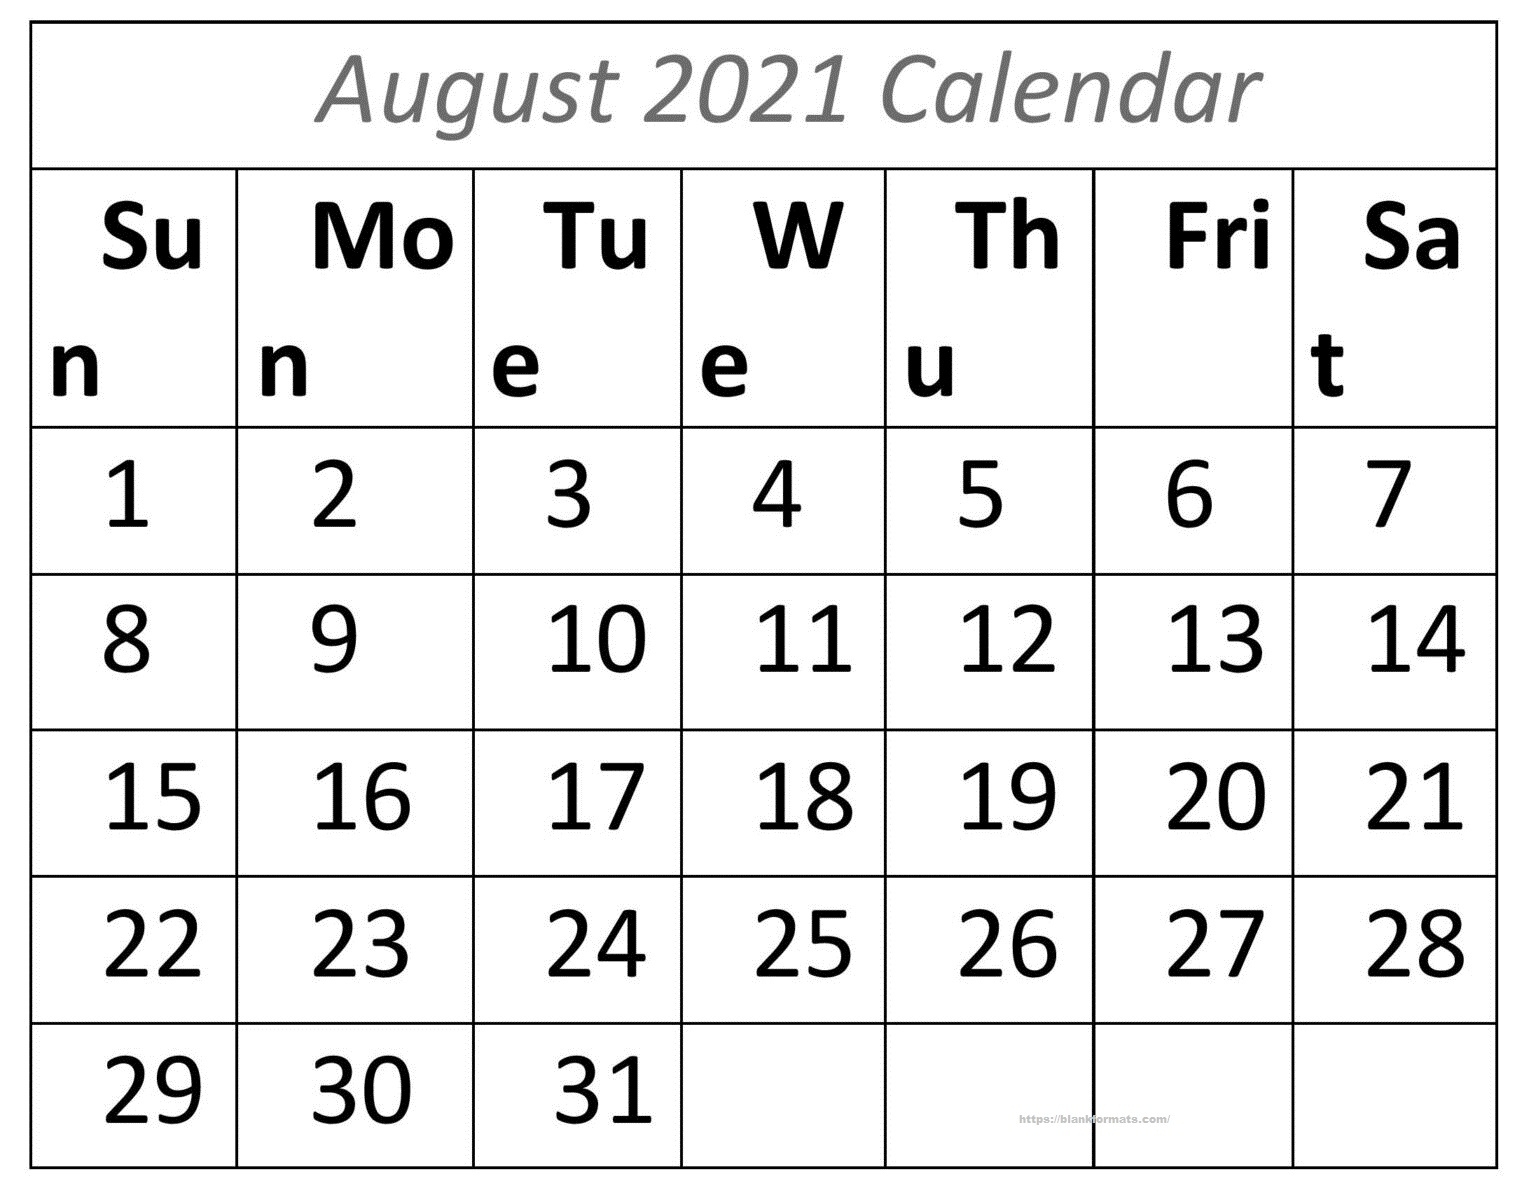 August 2021 Calendar Template | Free Download For Schedule August 2021 Calendar Editable